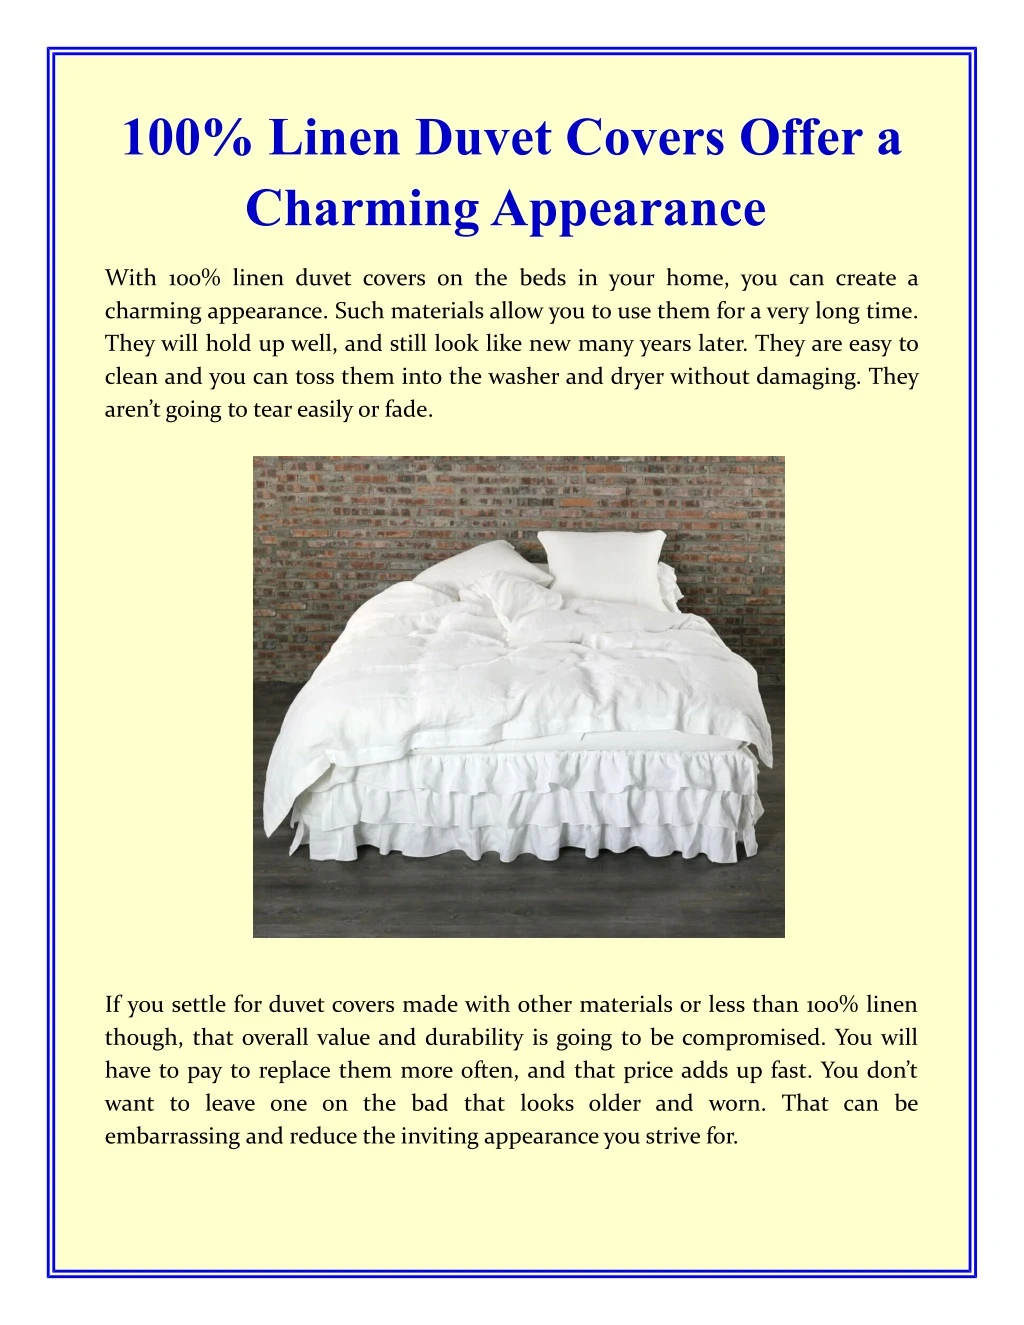 100 linen duvet covers offer a charming appearance